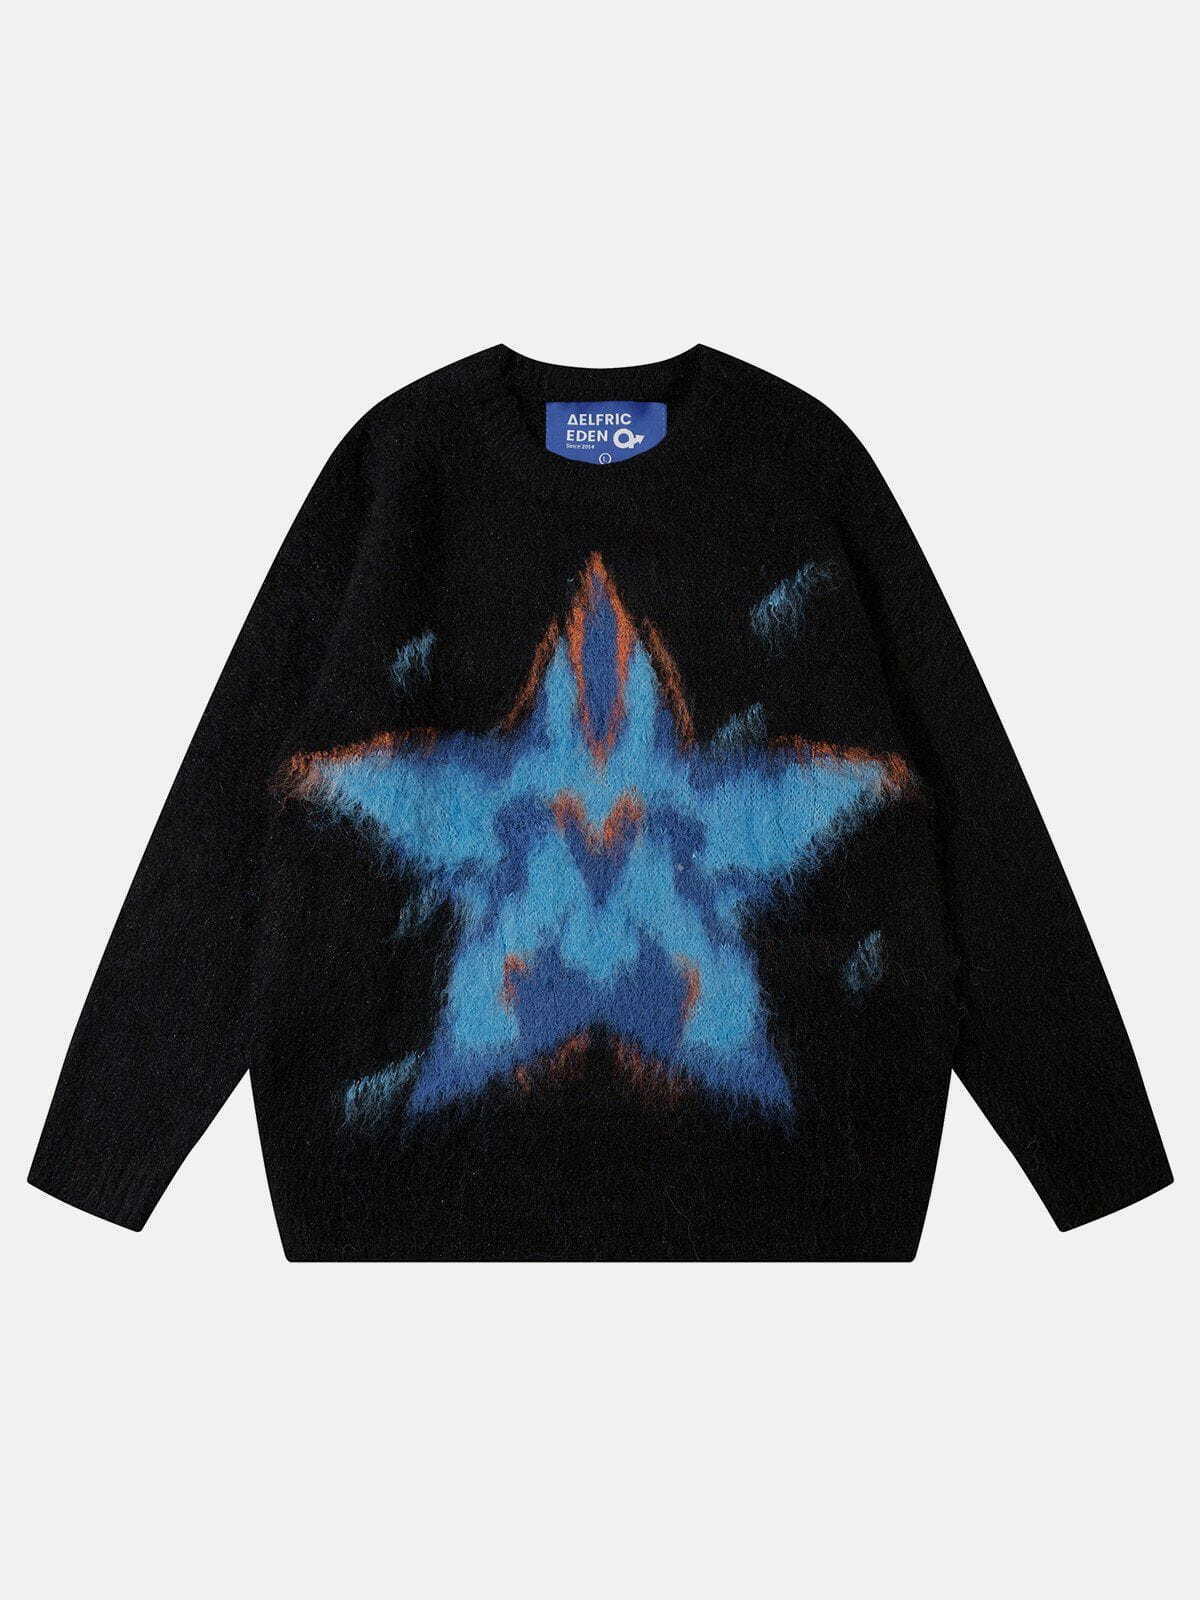 youthful star jacquard sweater   wool blend & urban chic 4628